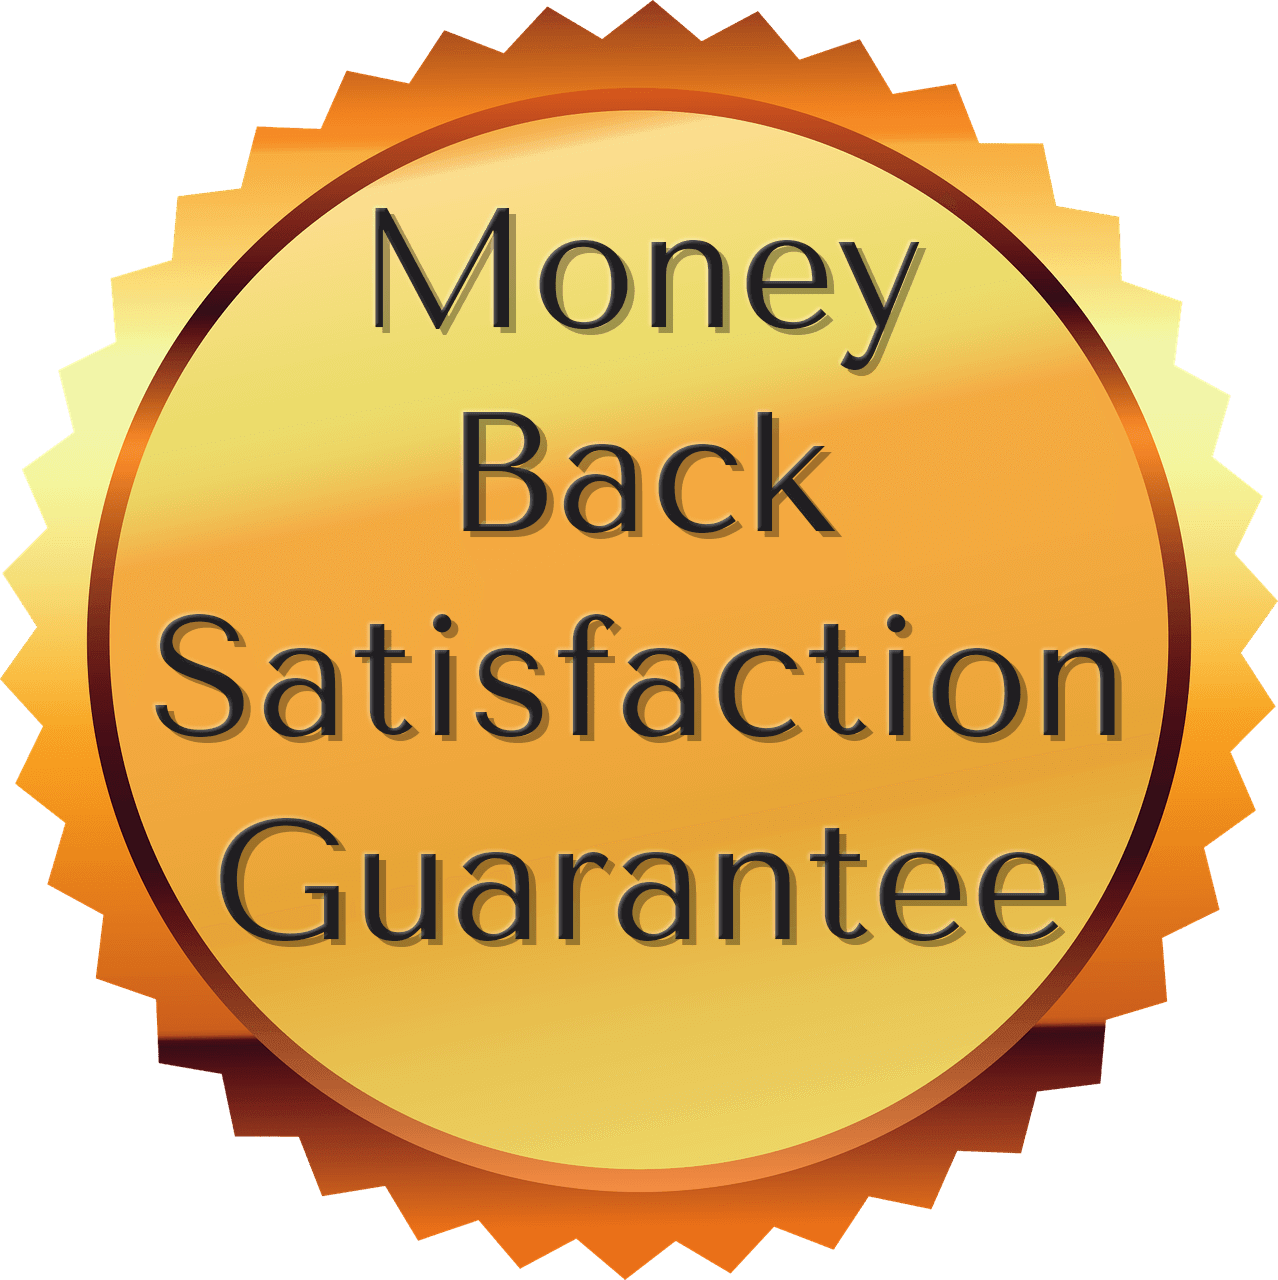 Money Back Satisfaction Guarantee Seal Image